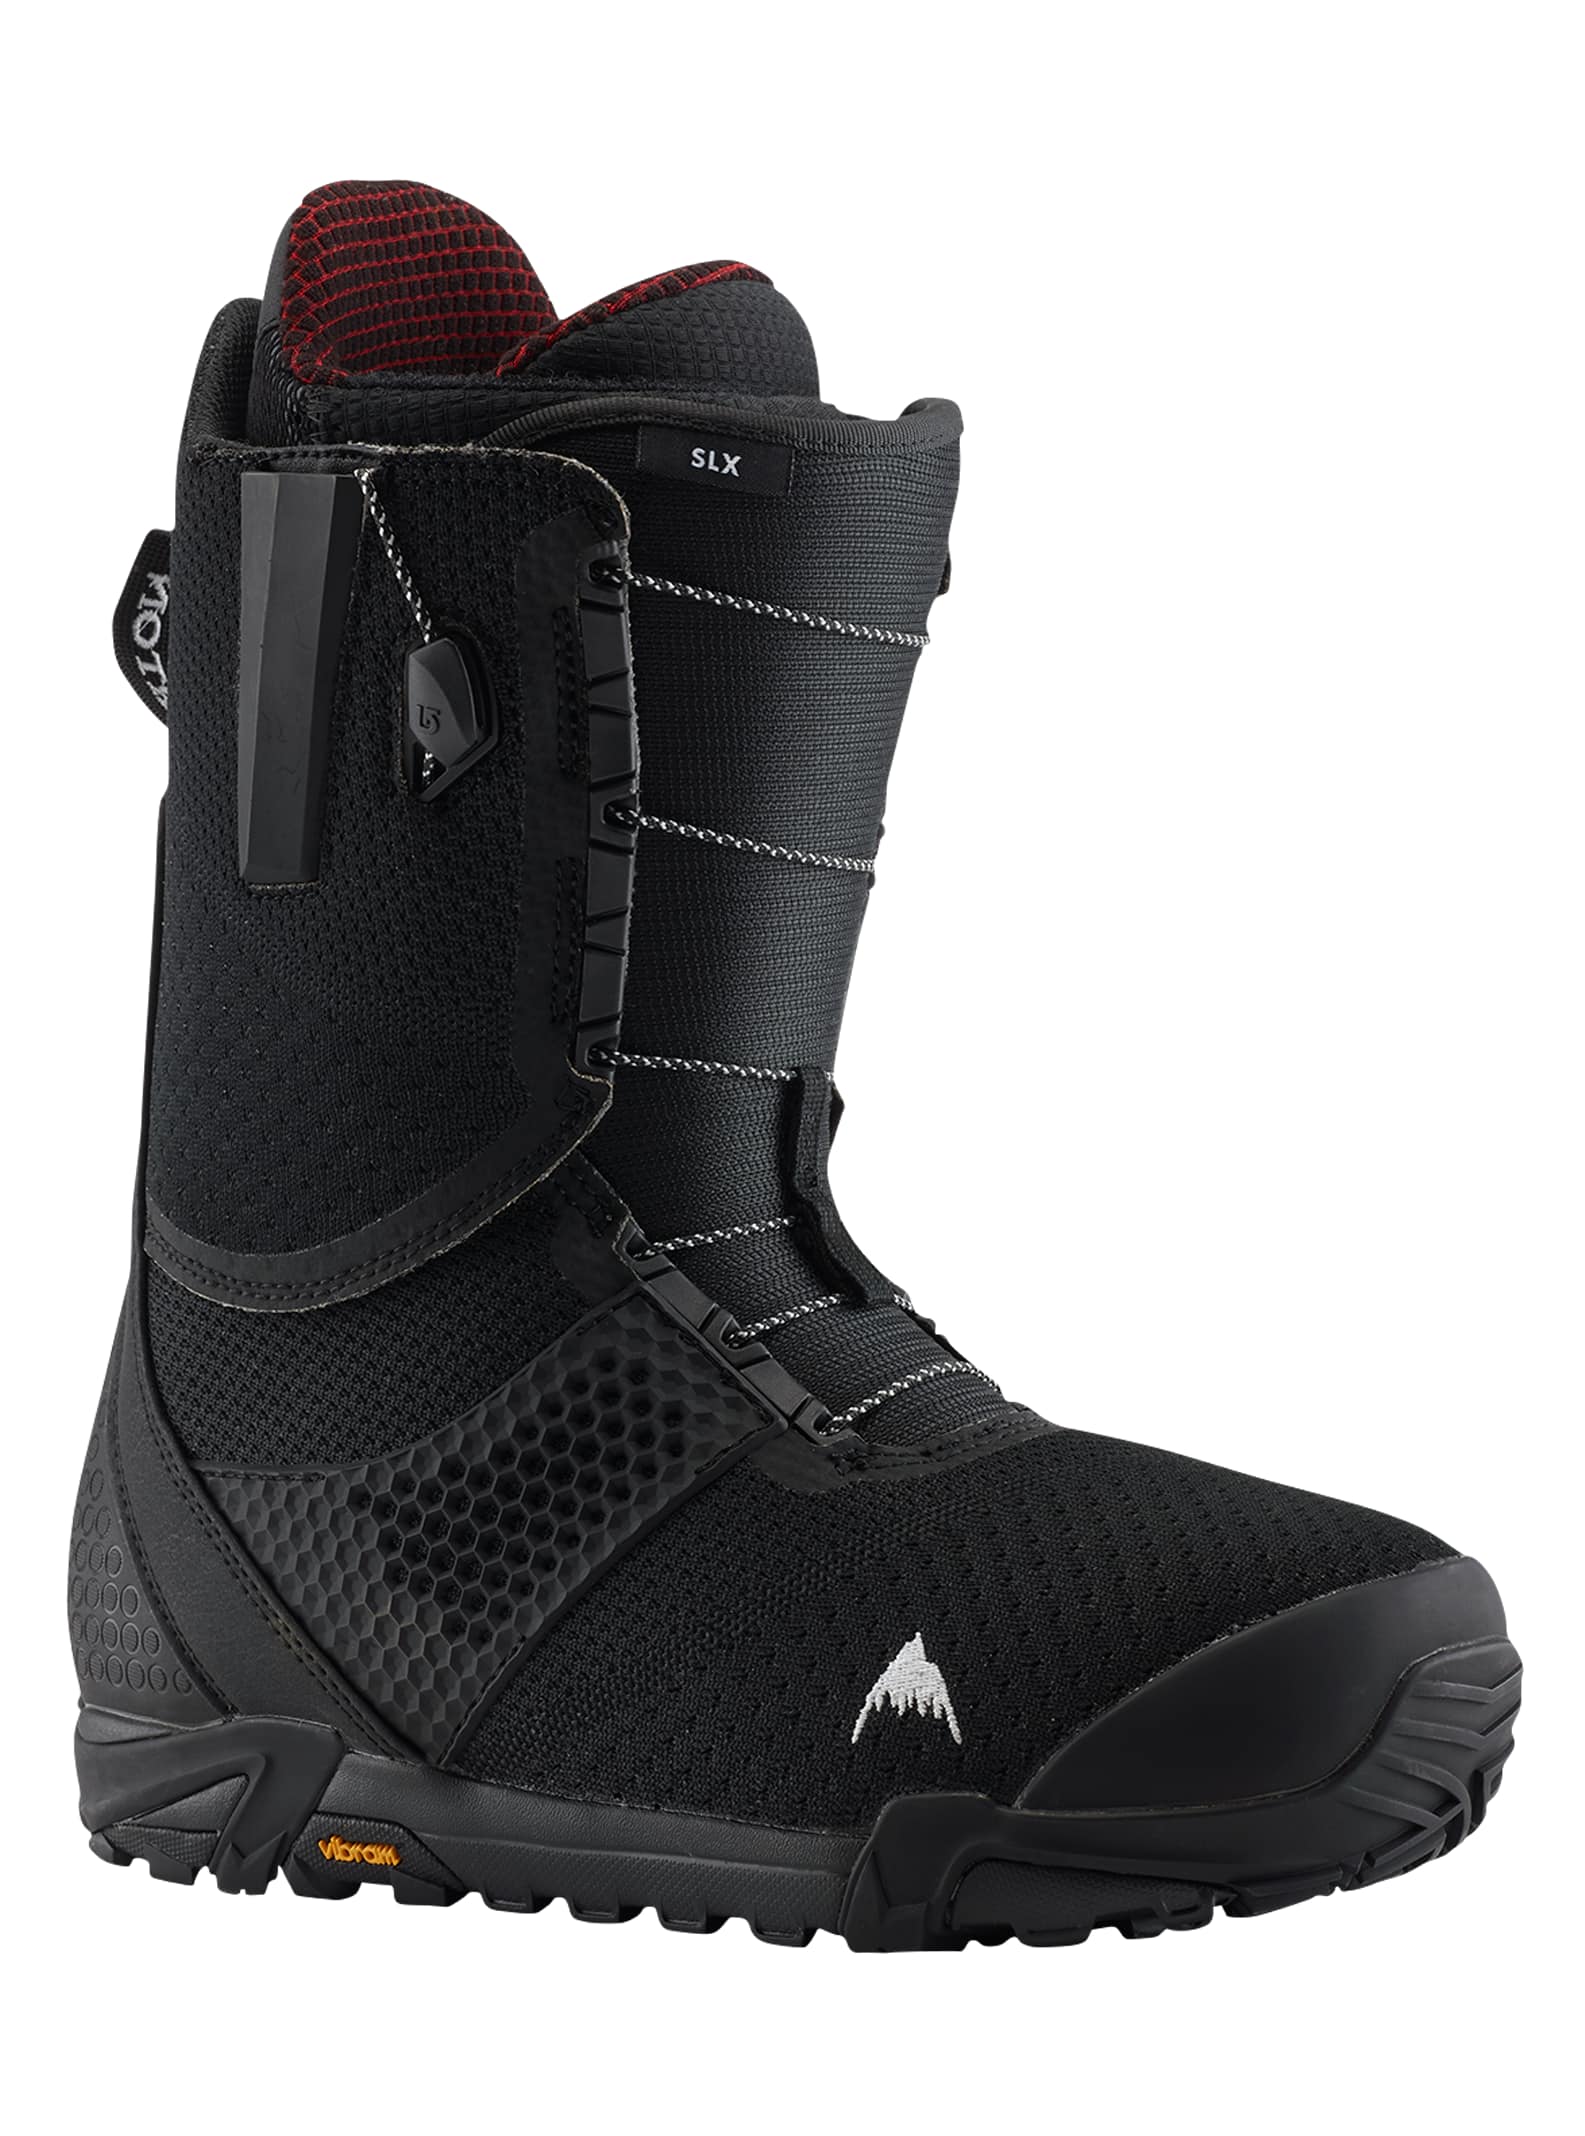 Men's Burton SLX Snowboard Boot